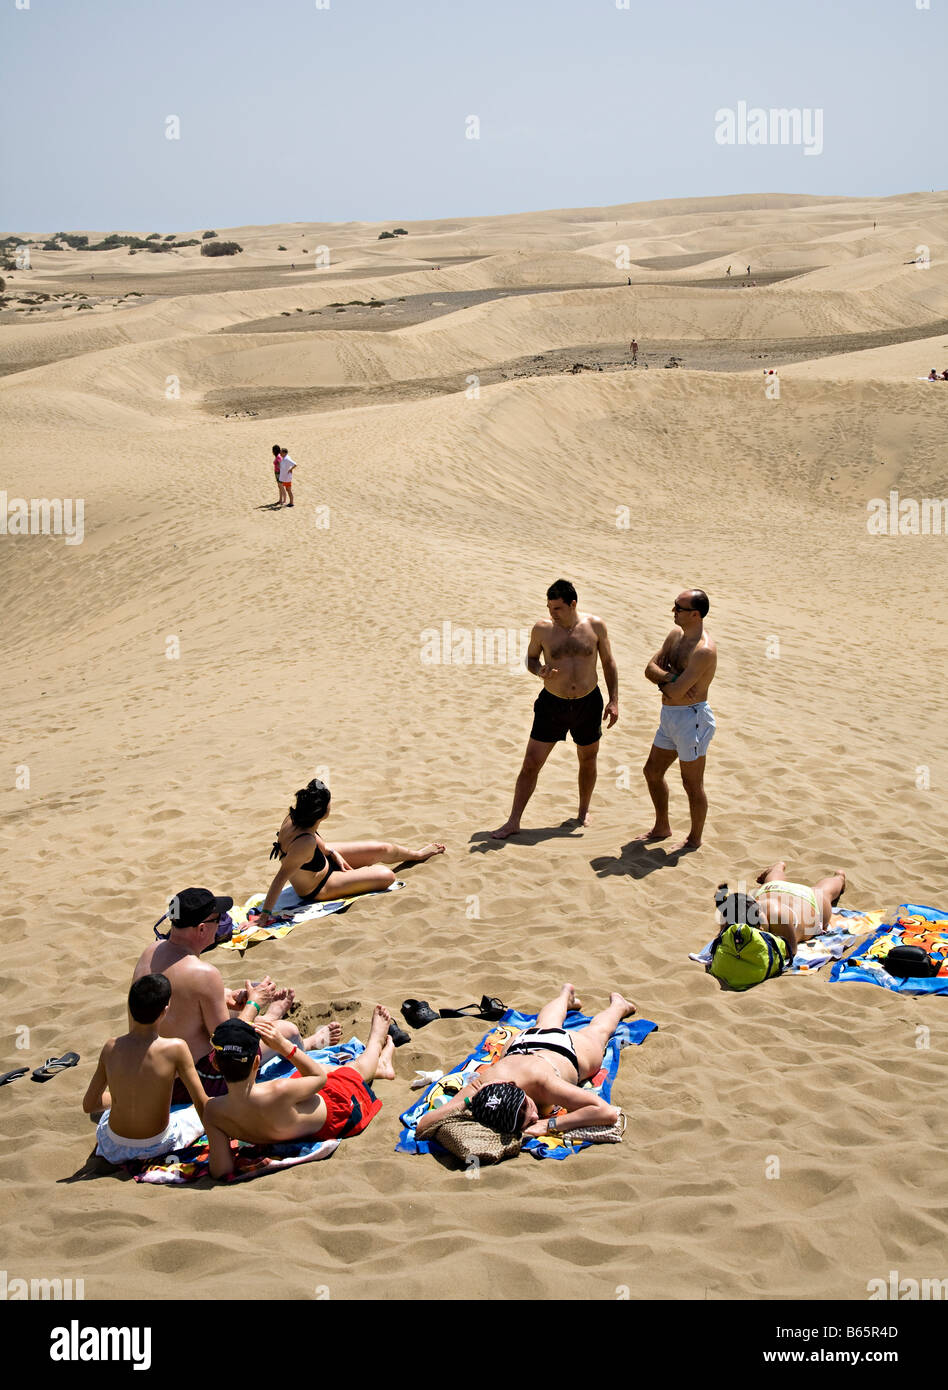 Gran canaria maspalomas beach dunes hi-res stock photography and images -  Alamy